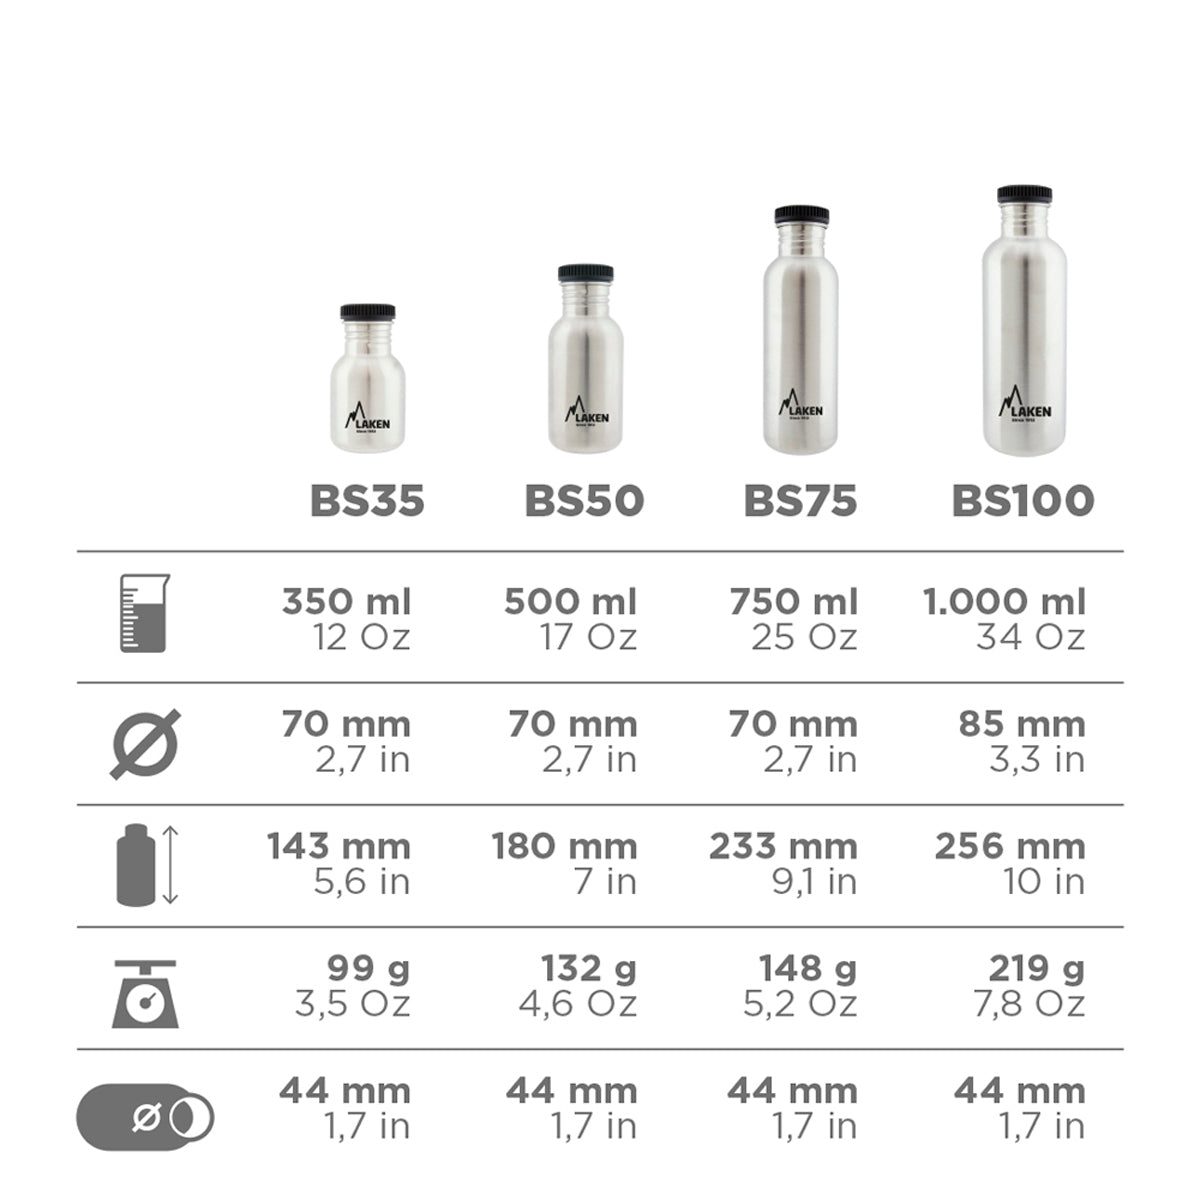 Laken RVS drinkfles Basic Steel serie - Kunststof dop - Diverse kleuren Laken